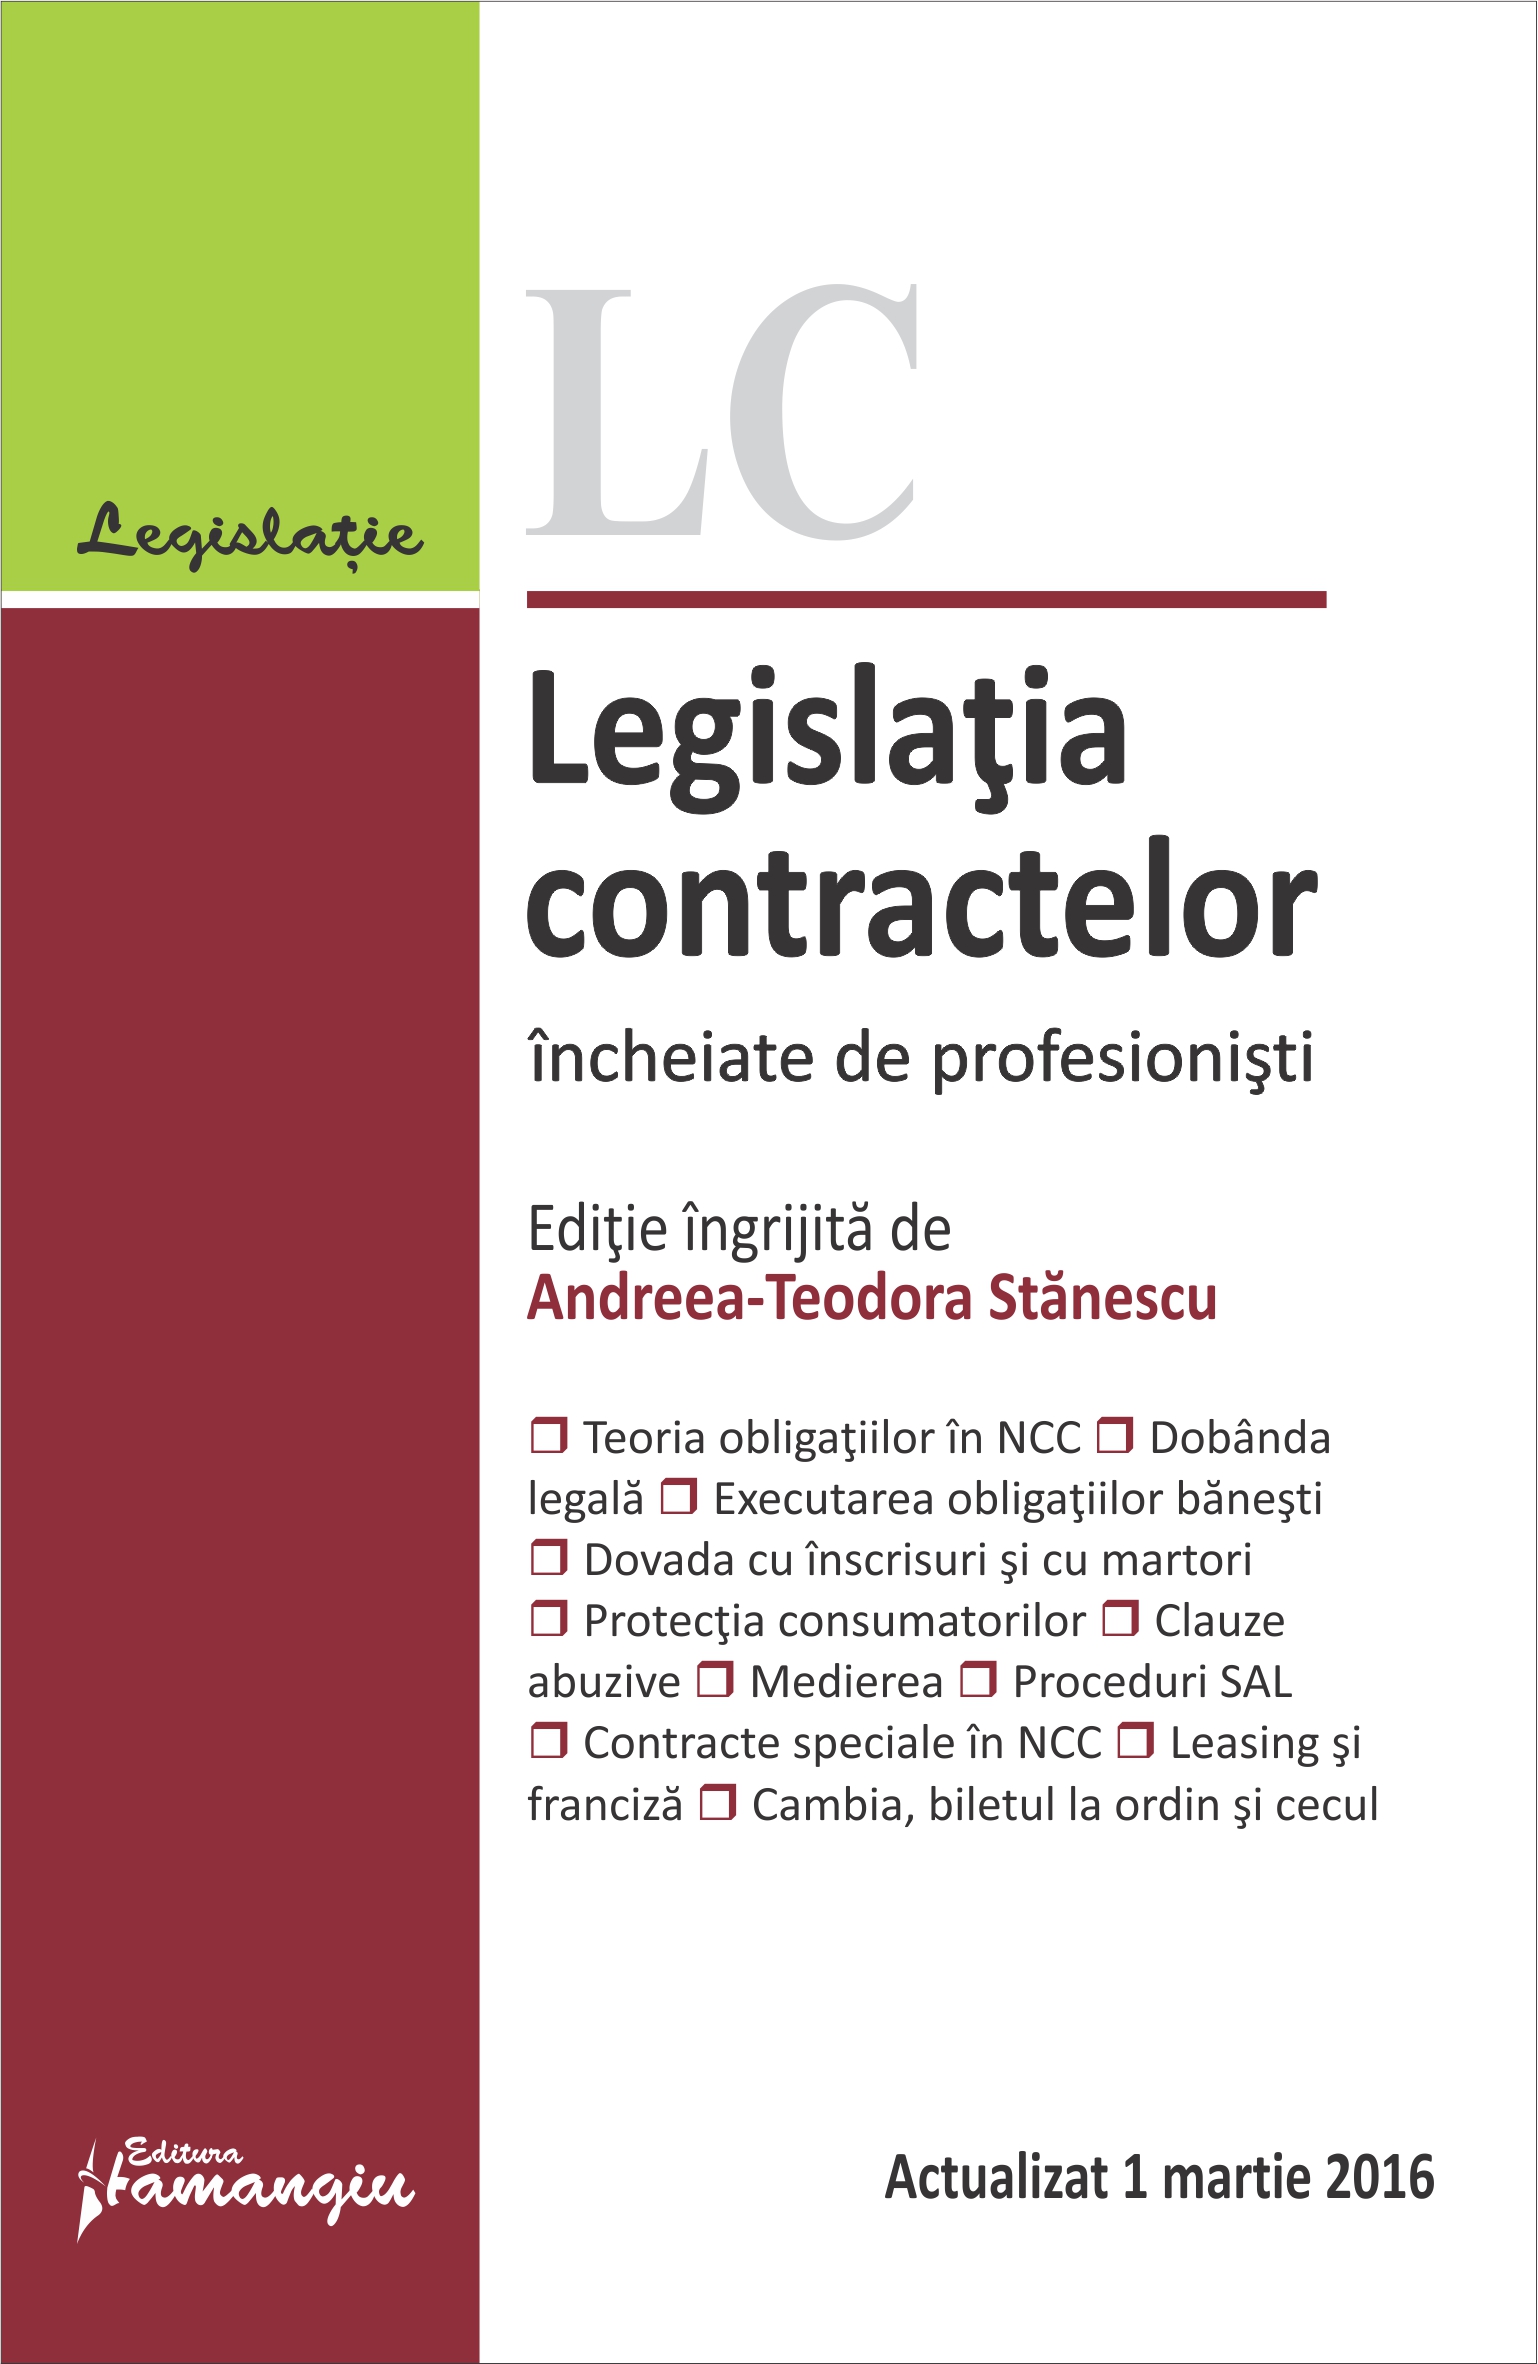 Legislatia contractelor incheiate de profesionisti act. 1 martie 2016